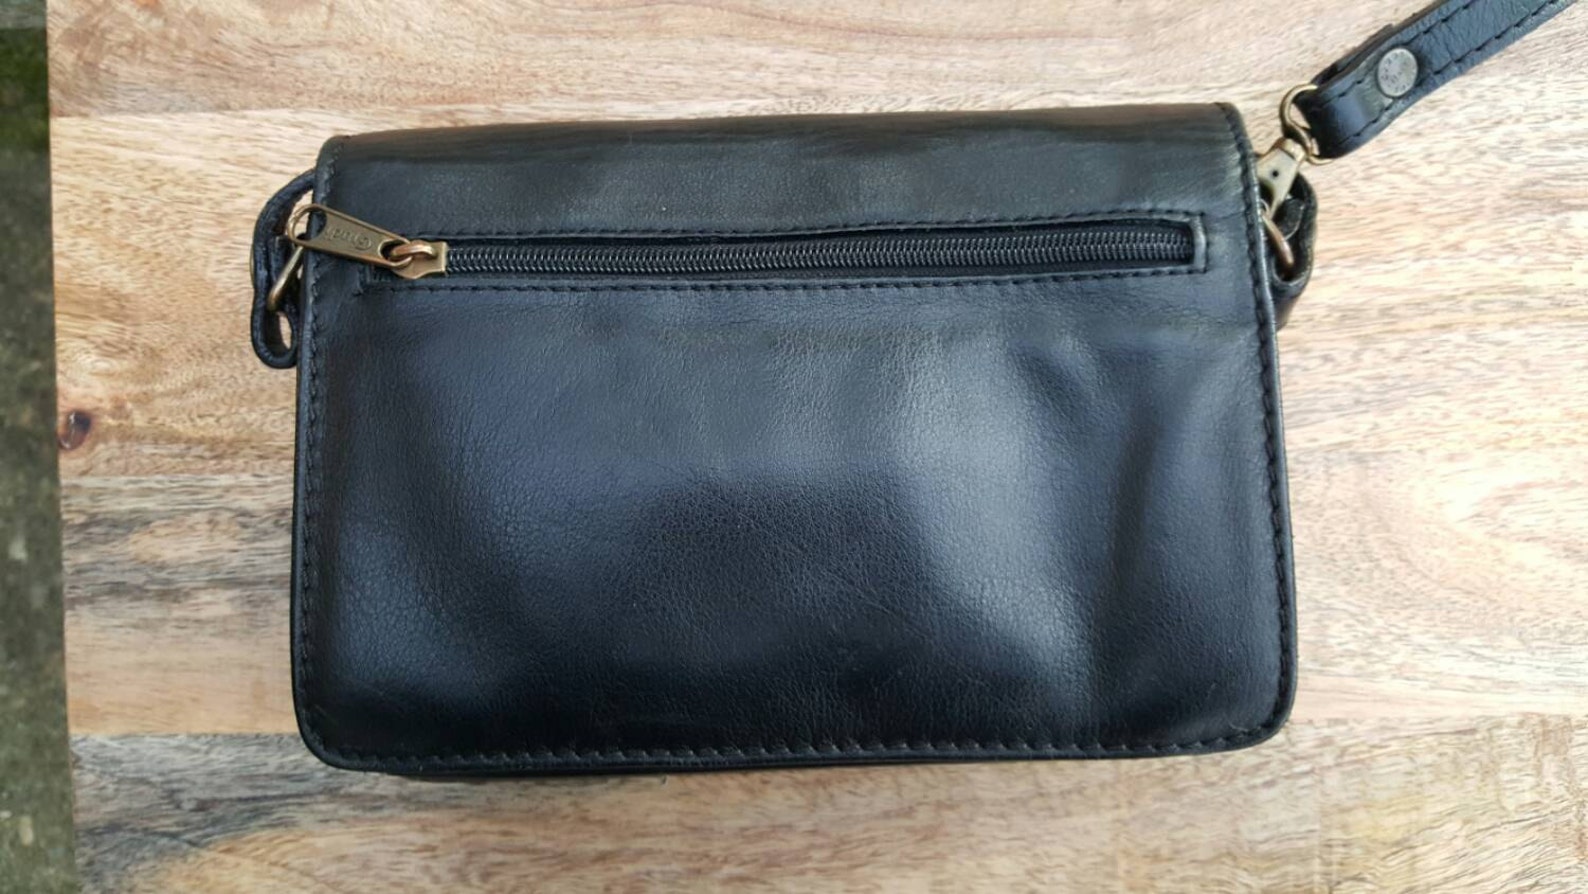 Giudi Black Leather Crossbody Bag Made in Italy | Etsy